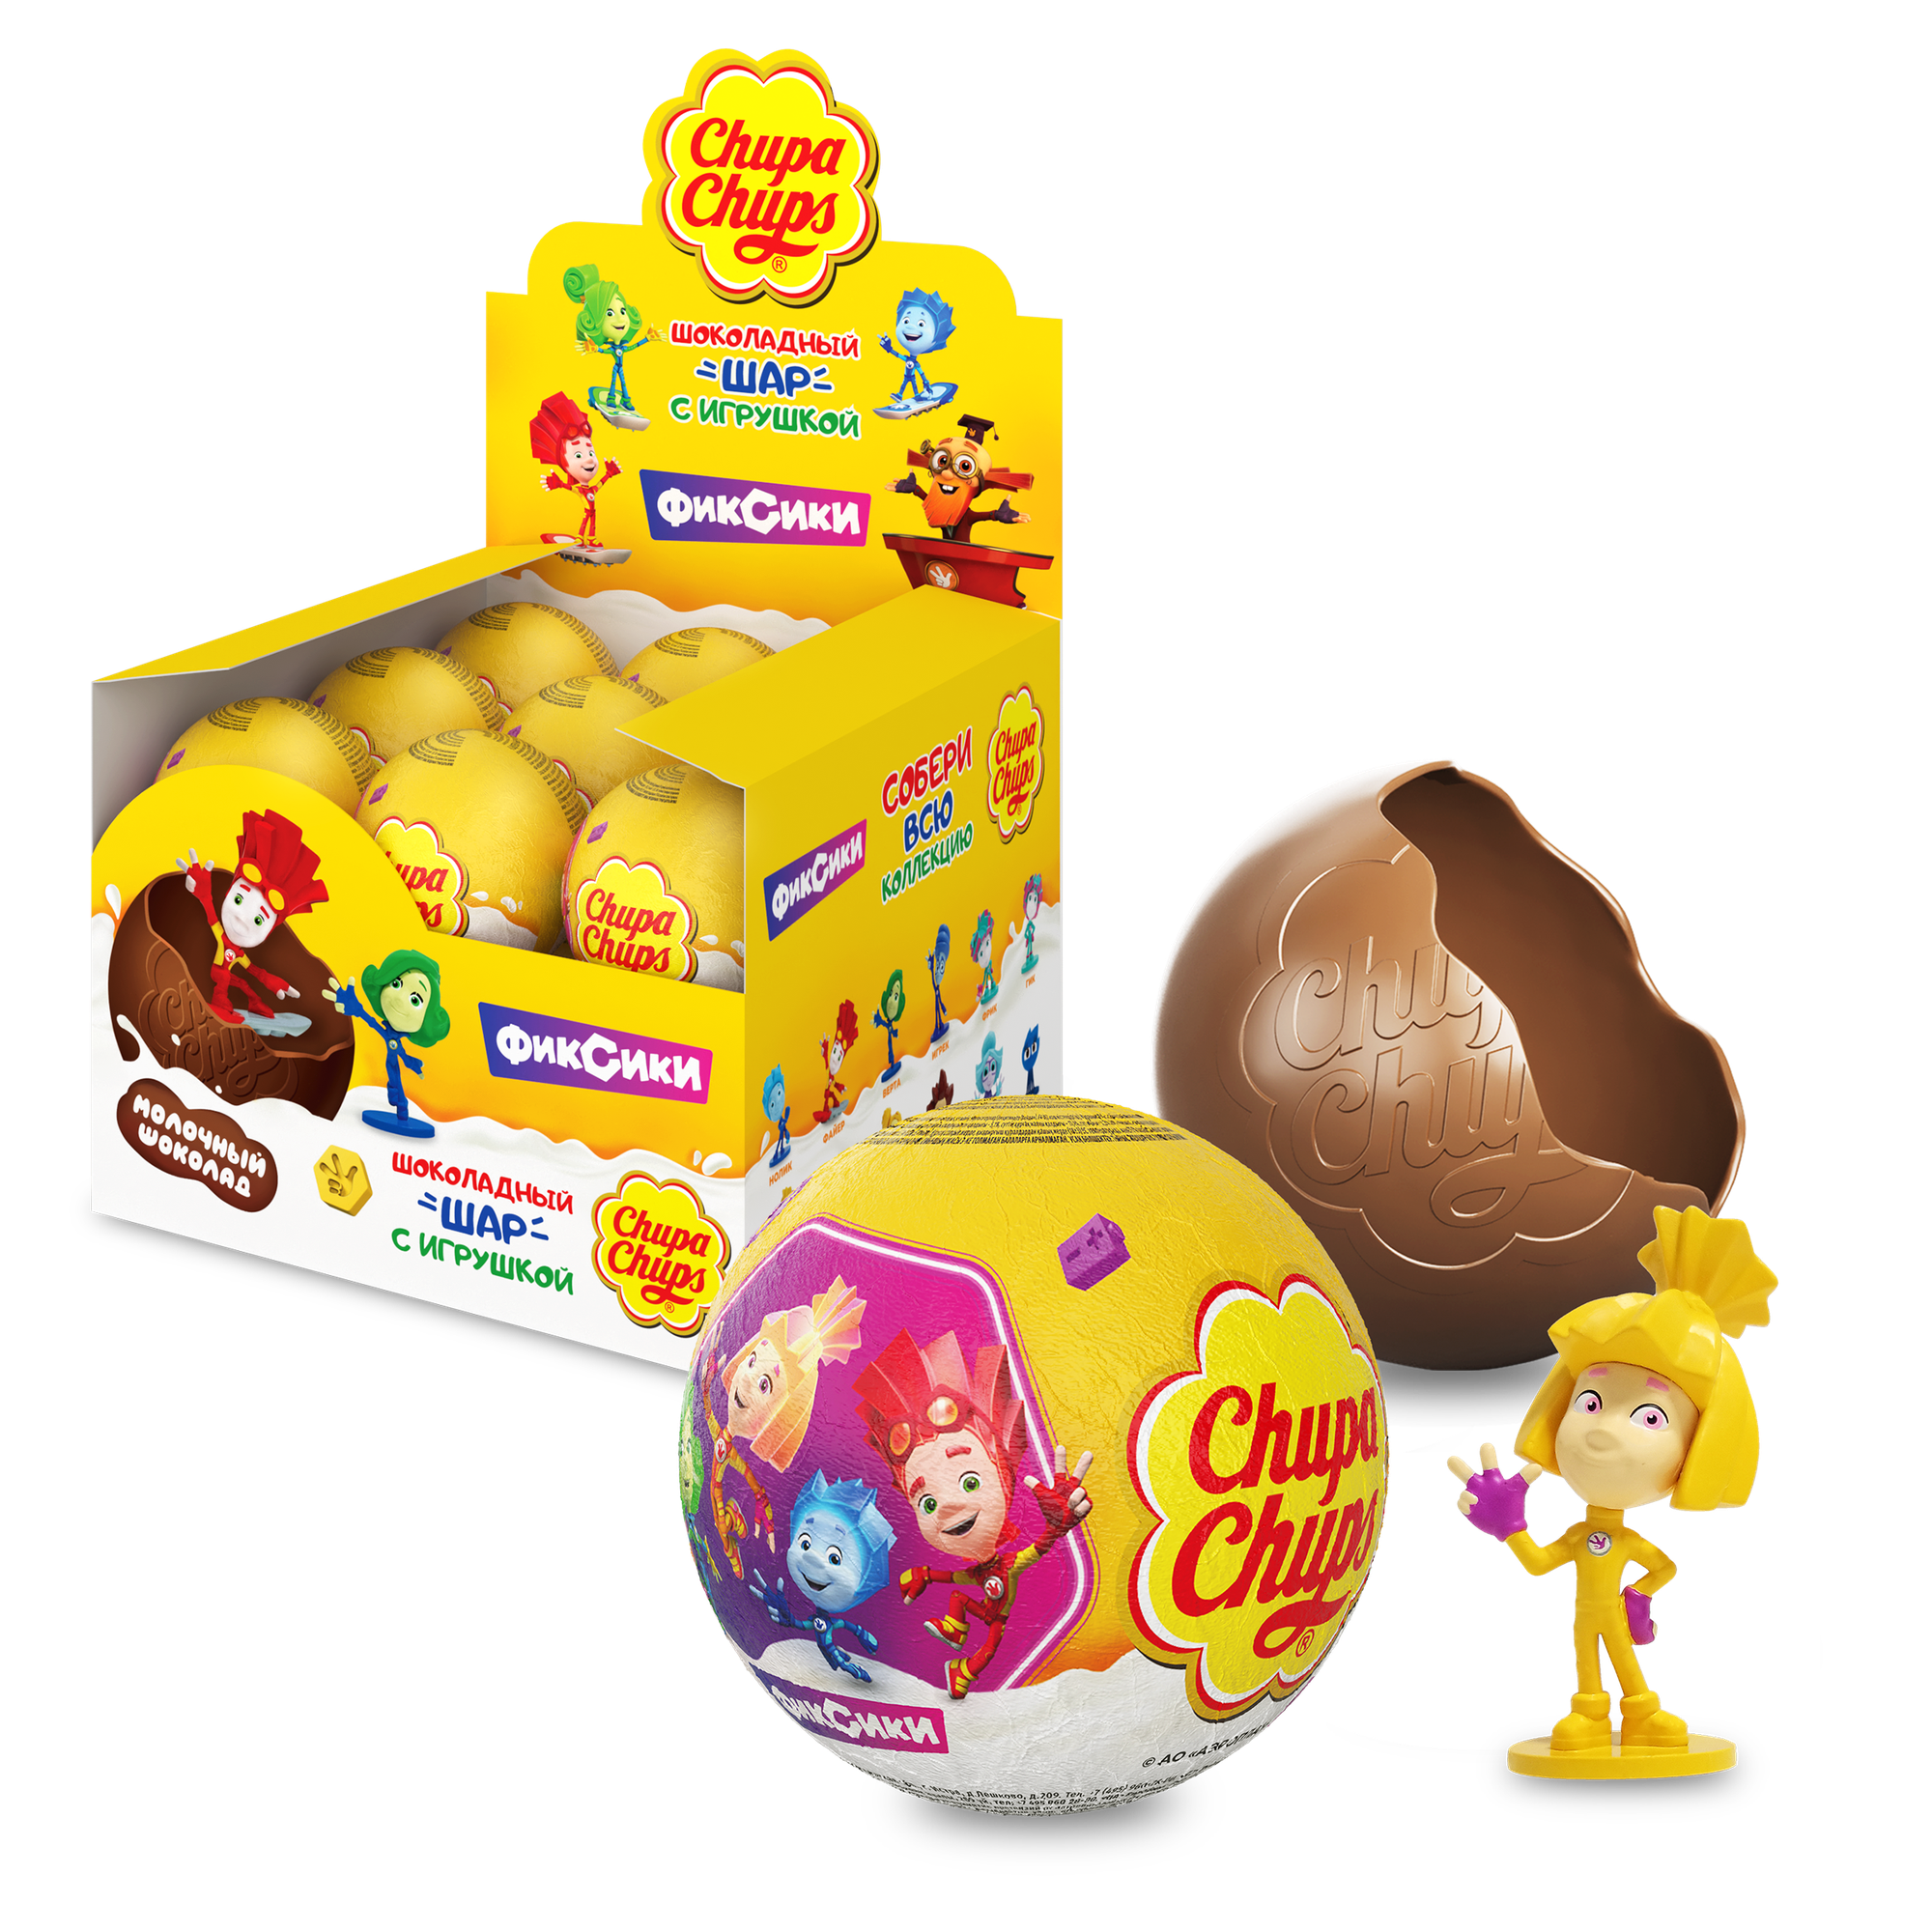 Шоколадный шар Chupa Chups с игрушкой внутри, "Фиксики", 18шт по 20г